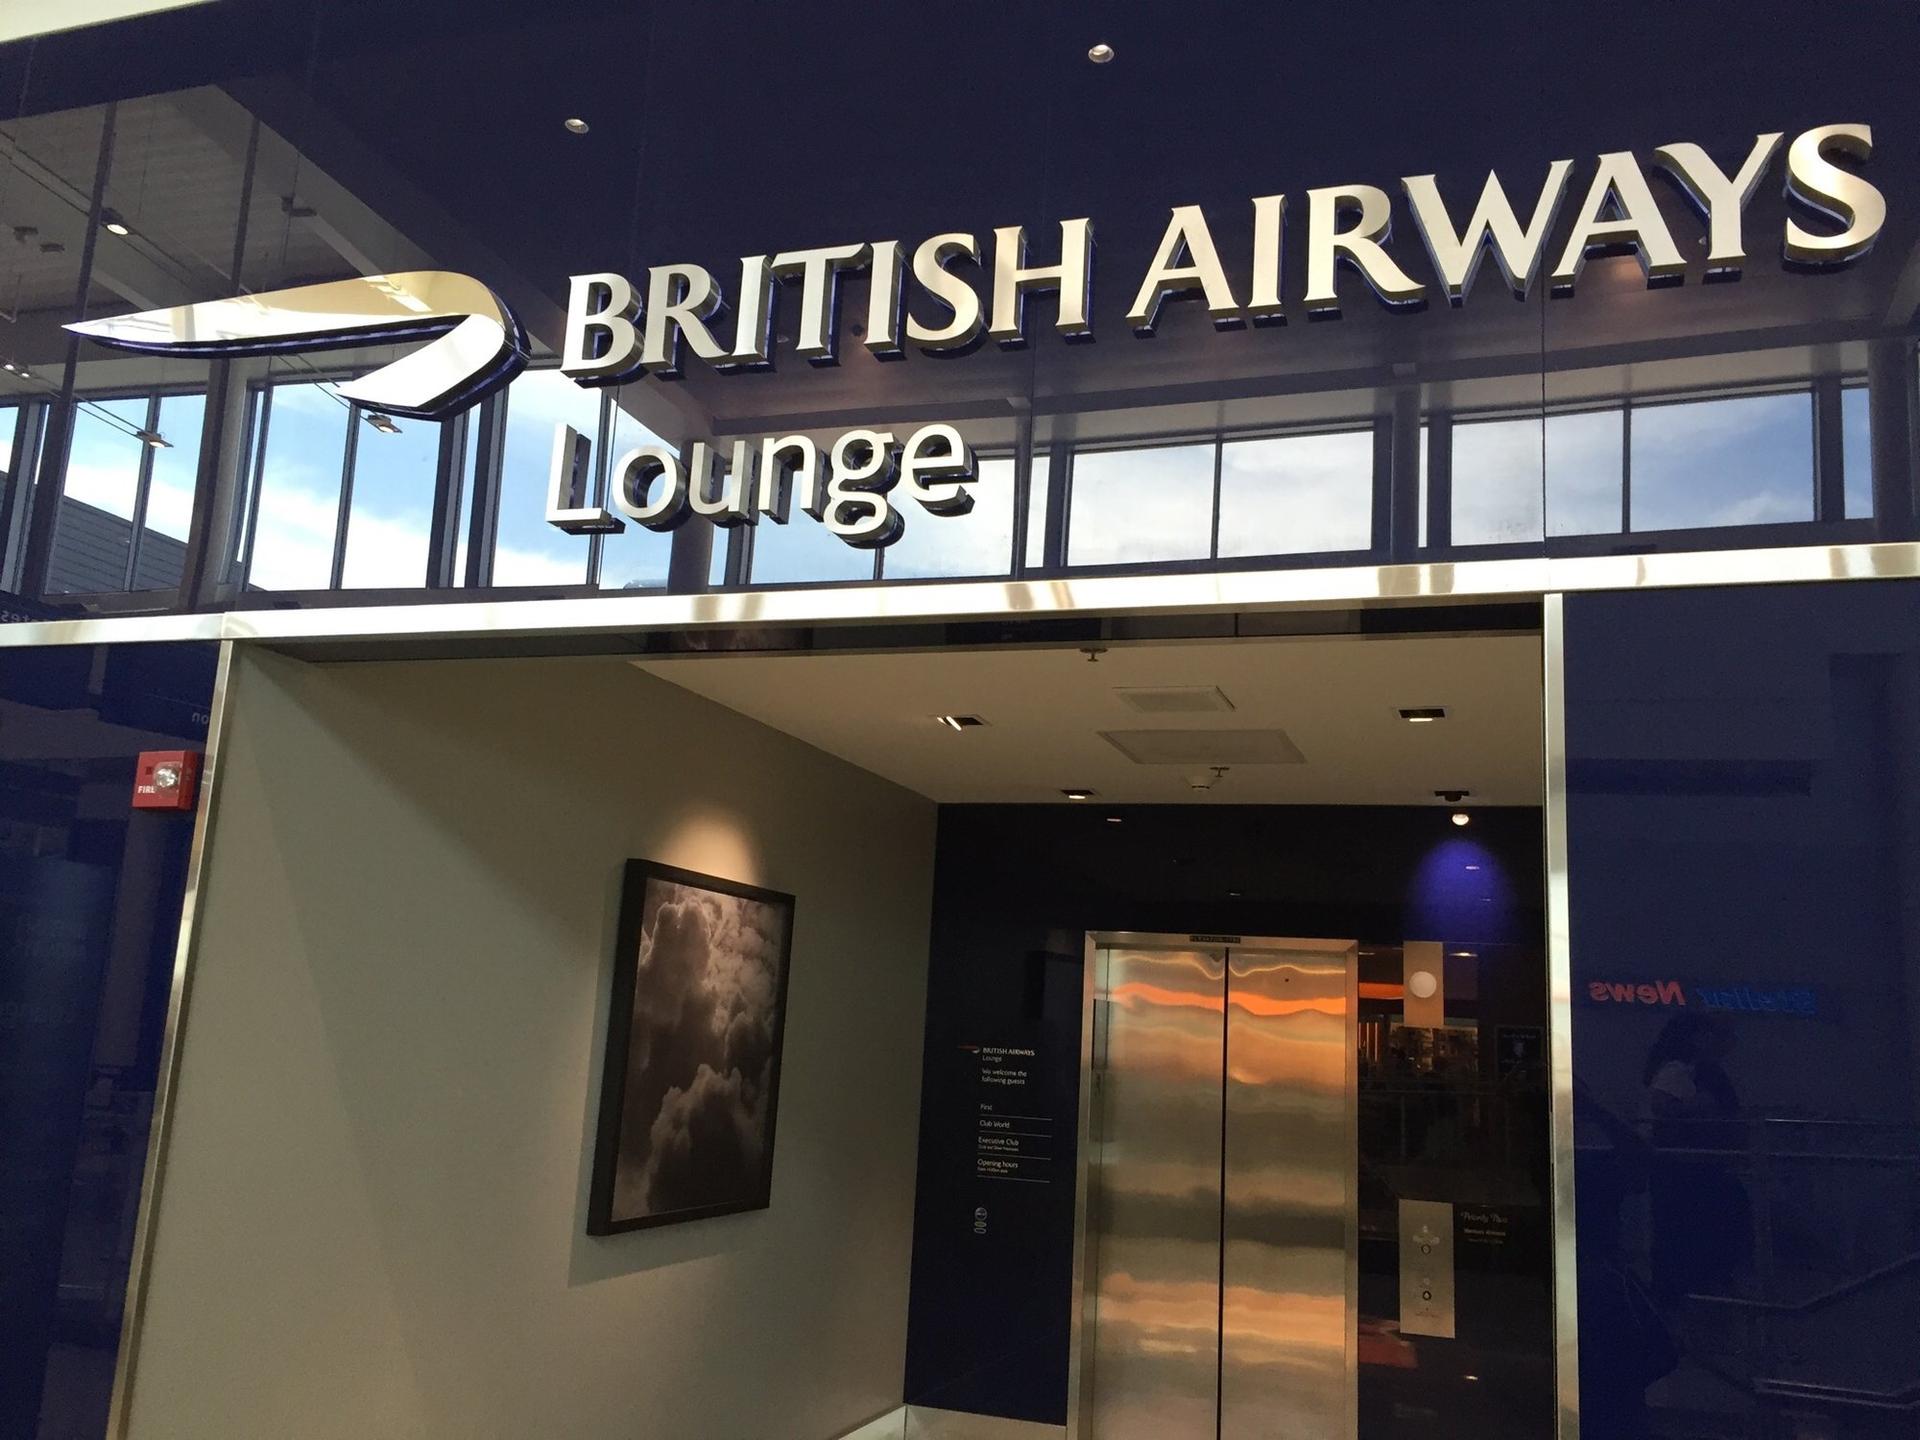 British Airways Galleries Lounge image 16 of 29